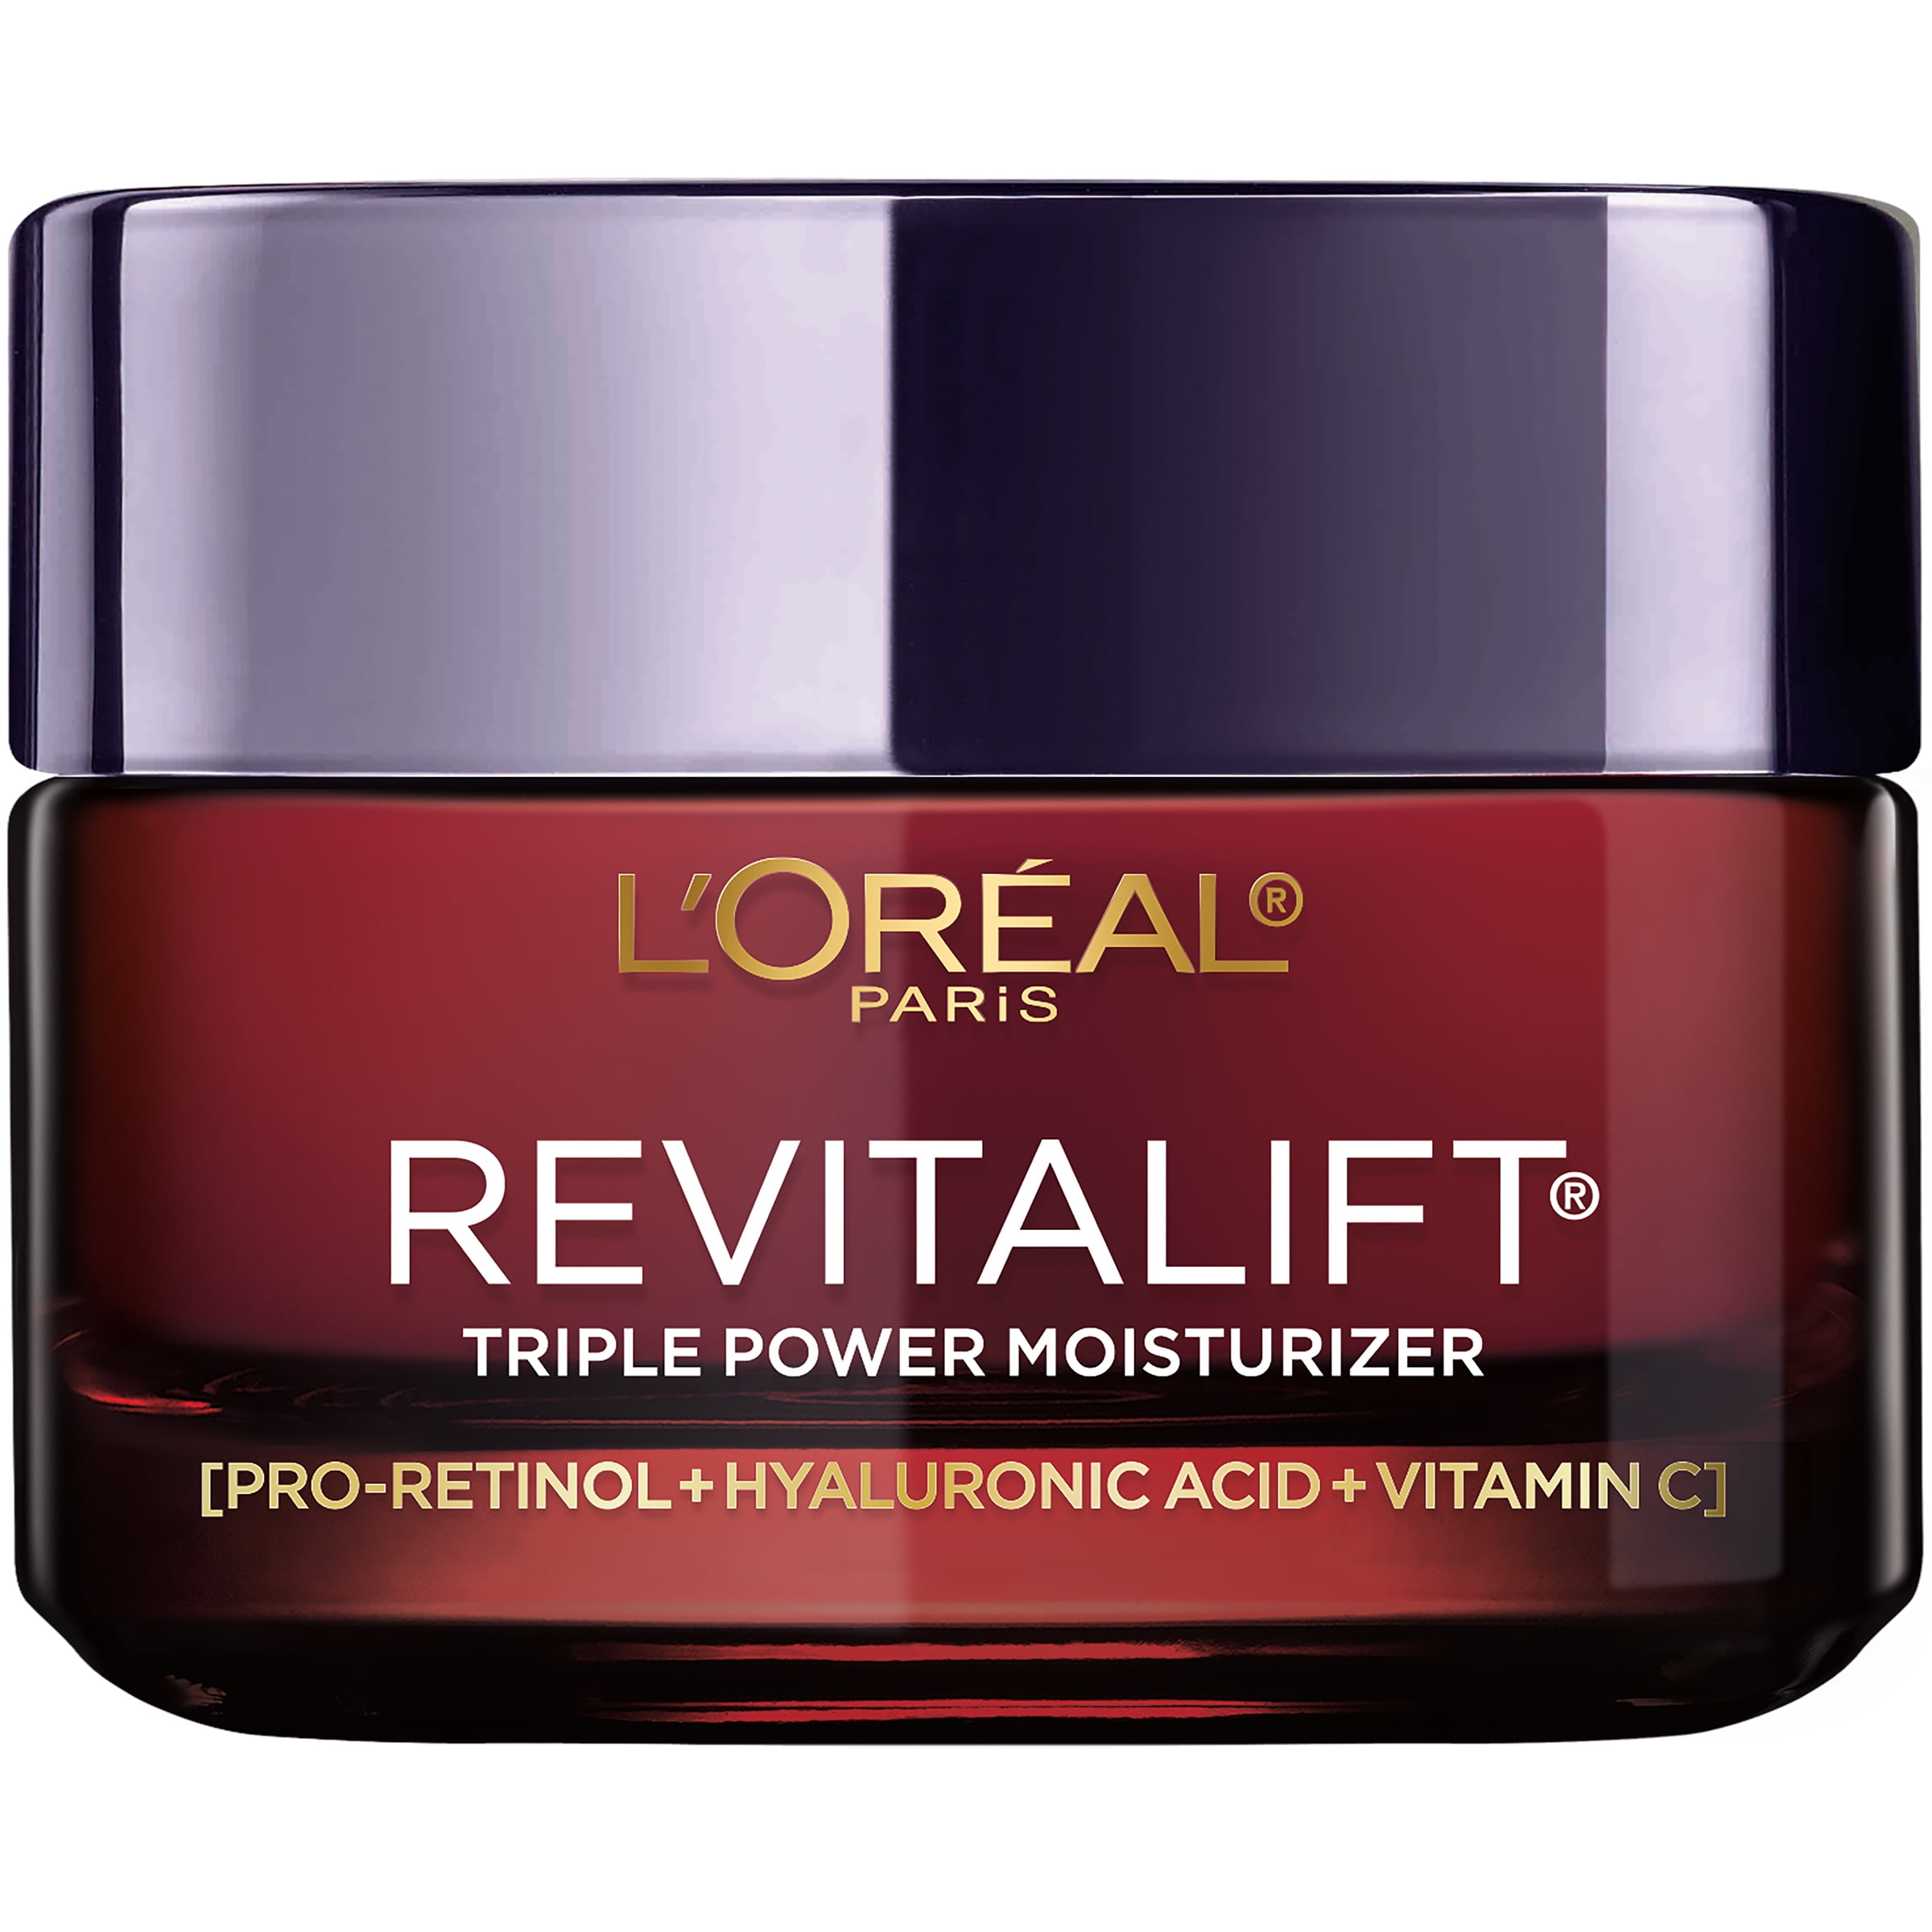 L'Oreal Paris Revitalift Triple Power Anti-Aging Face Moisturizer Cream, 1.7 oz